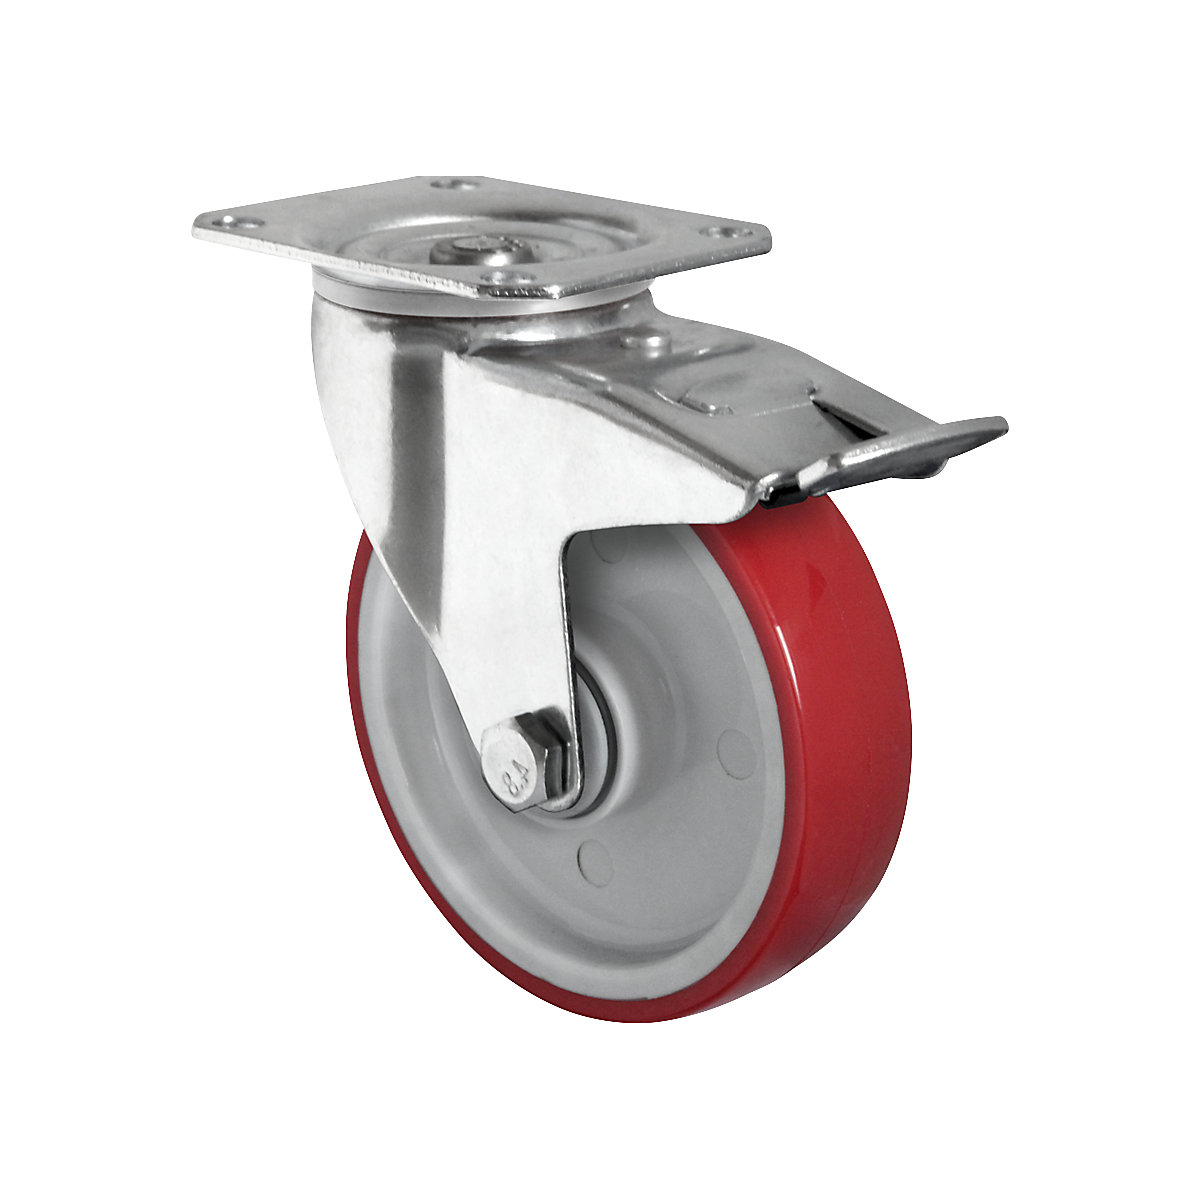 EUROKRAFTbasic – PU tyre, red on nylon rim, wheel Ø x width 100 x 32 mm, 2+ items, swivel castor with double stop